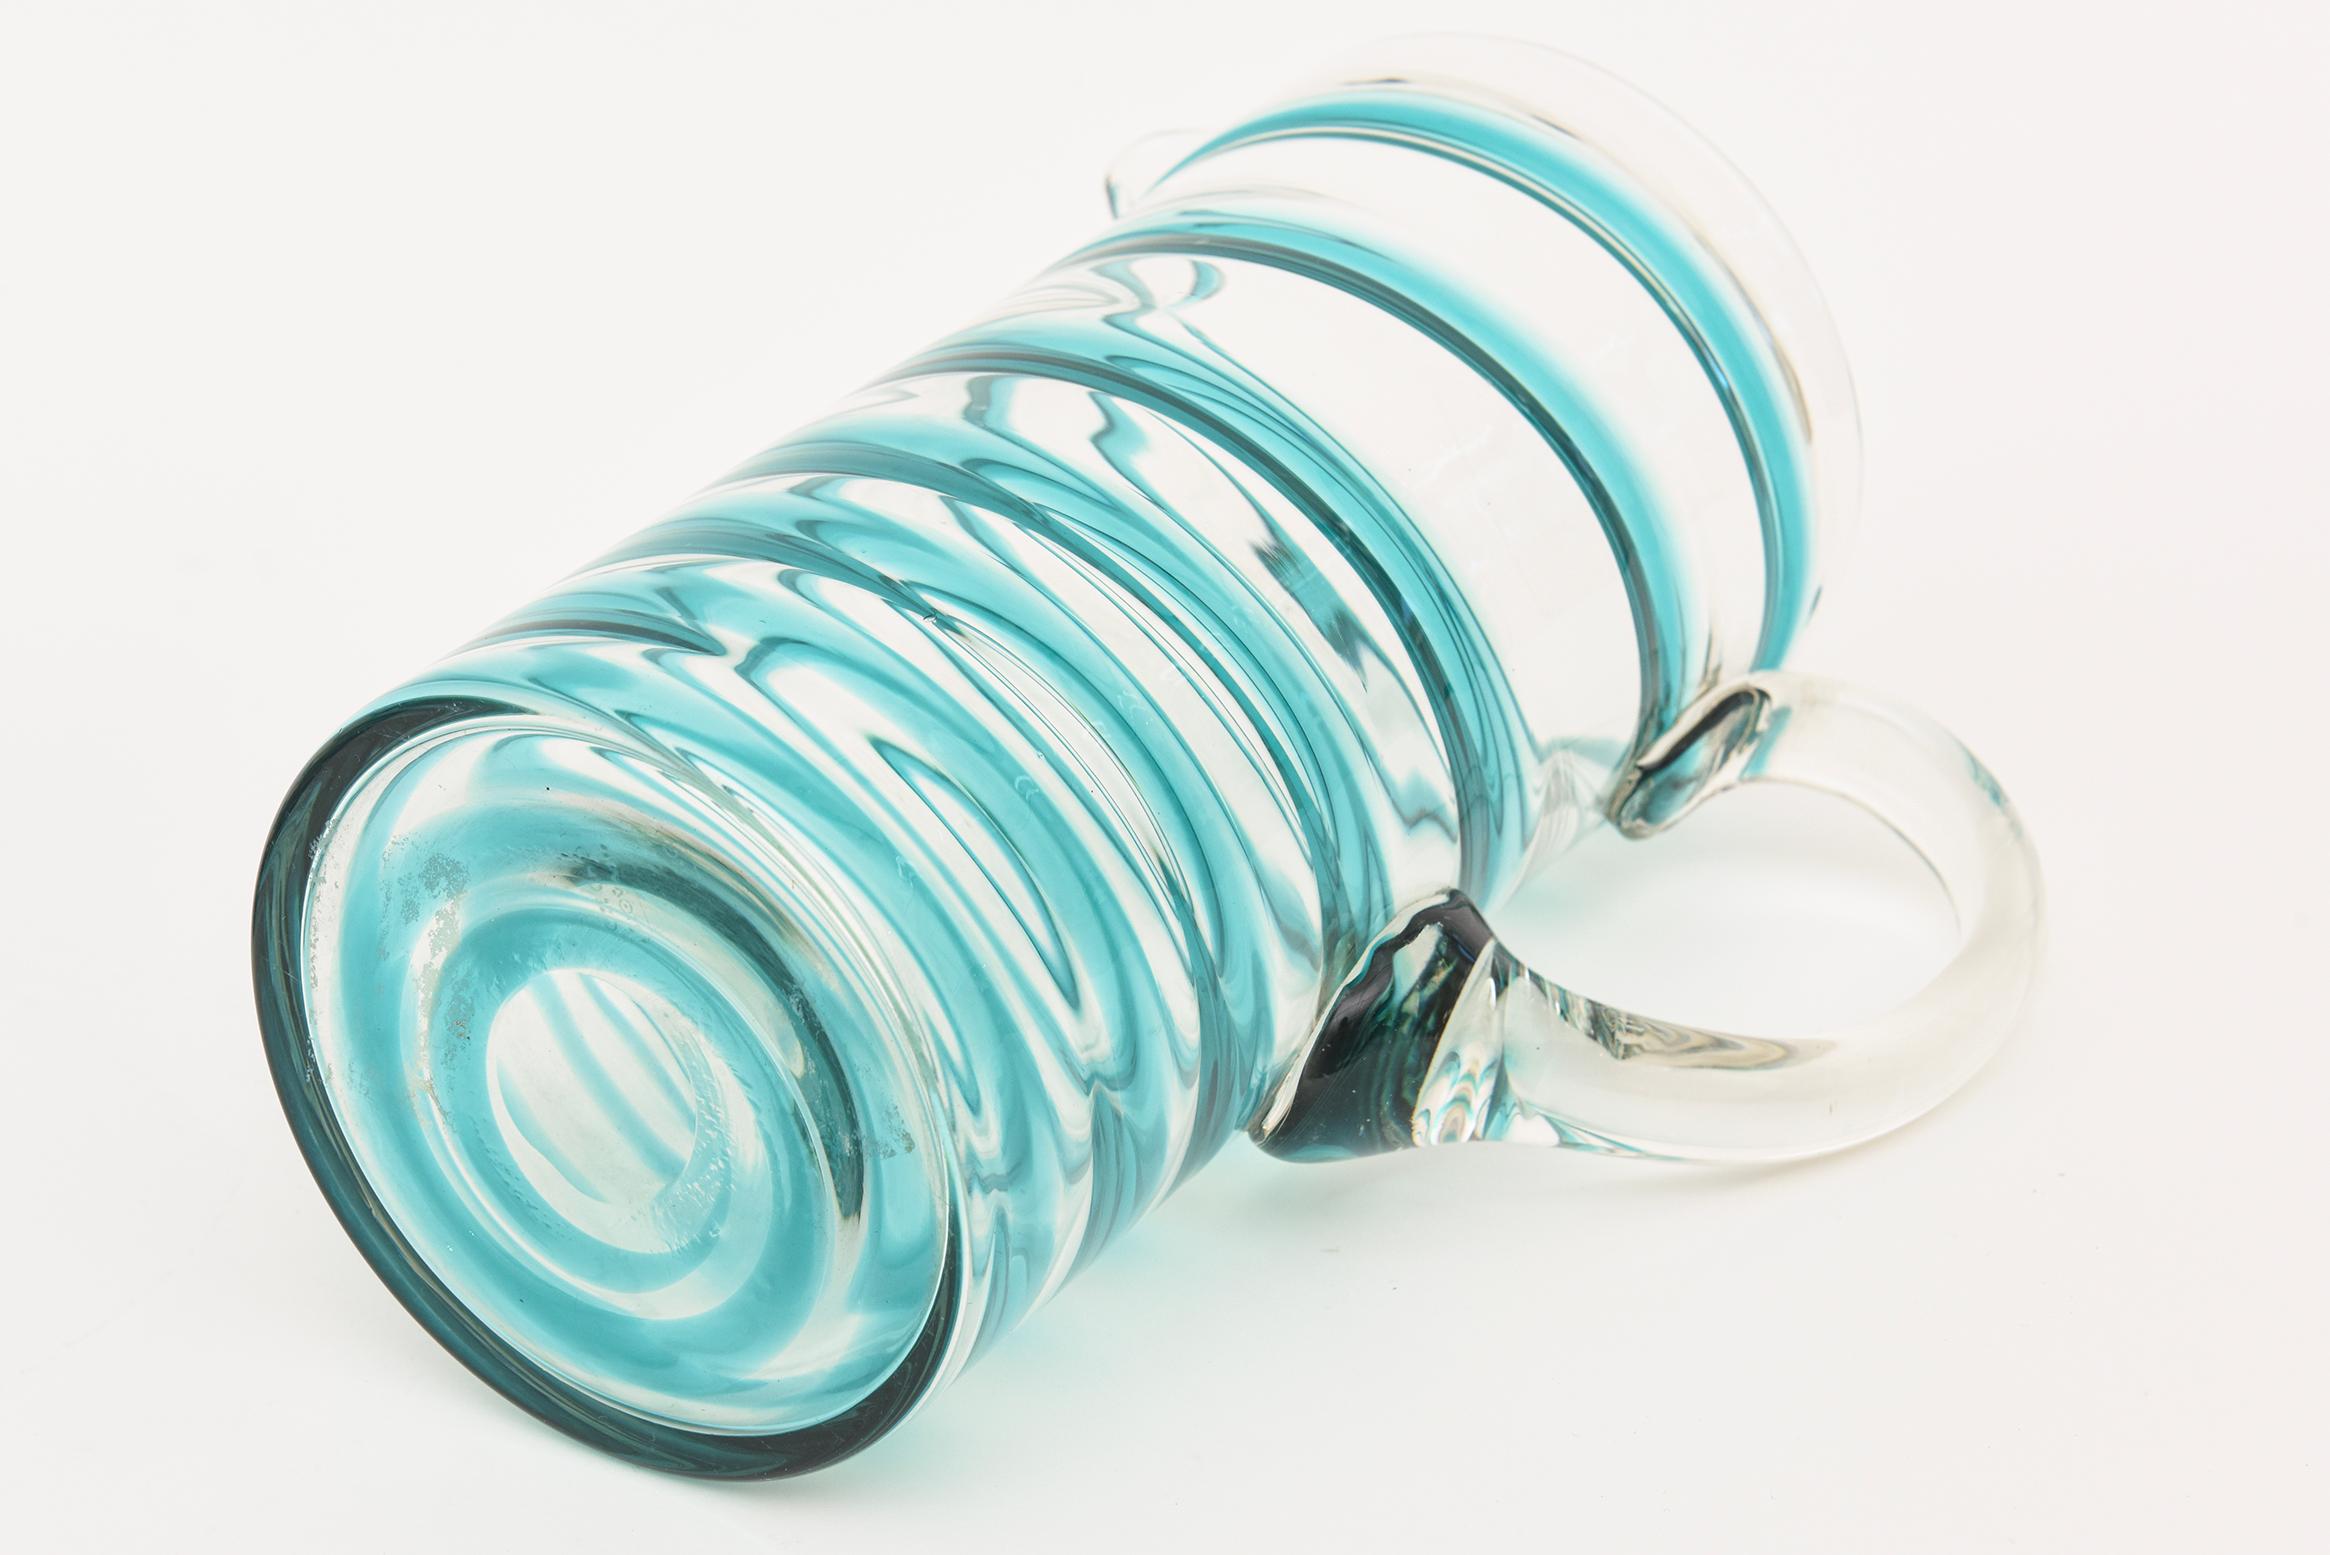 Murano Venini Turquoise Glass Swirled Ice Tea Or Lemonade Pitcher & Glasses Set For Sale 2